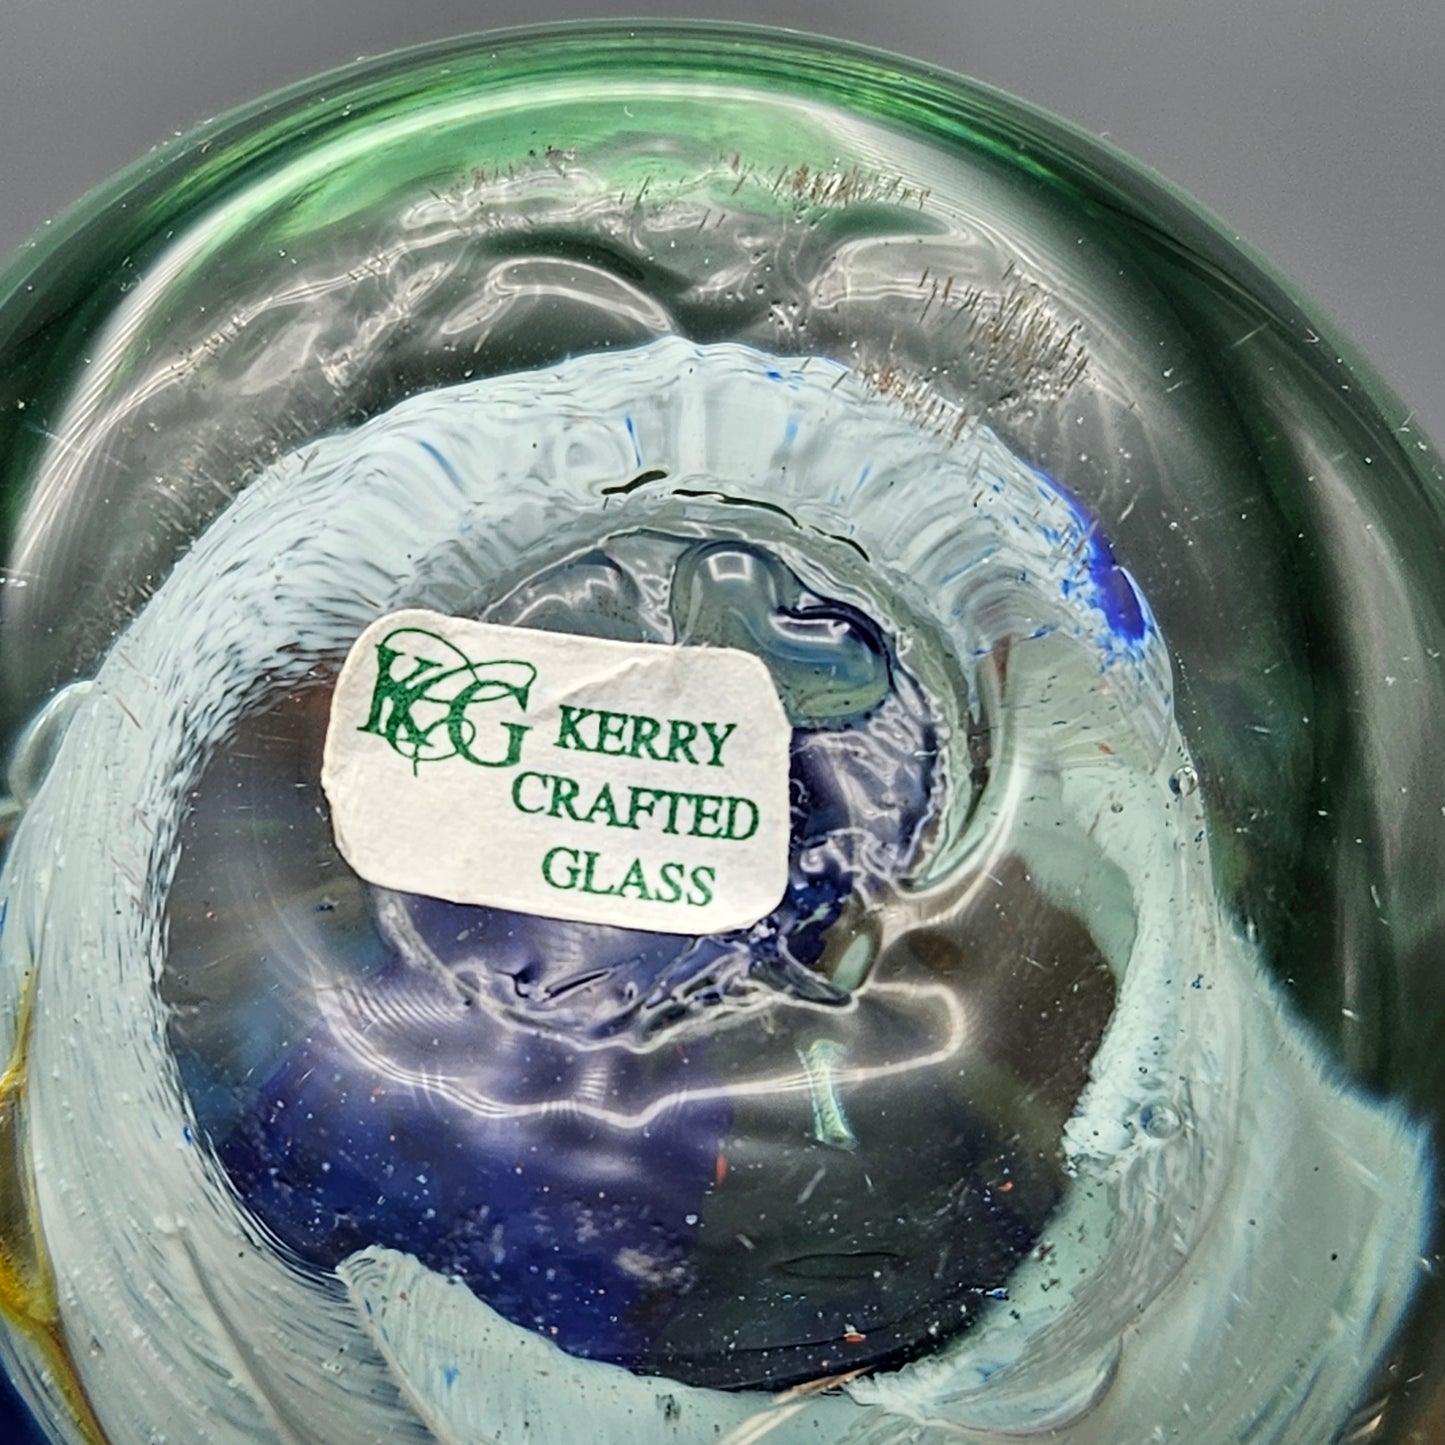 Kerry Crafted Glass Irish Studio Glass Paperweight